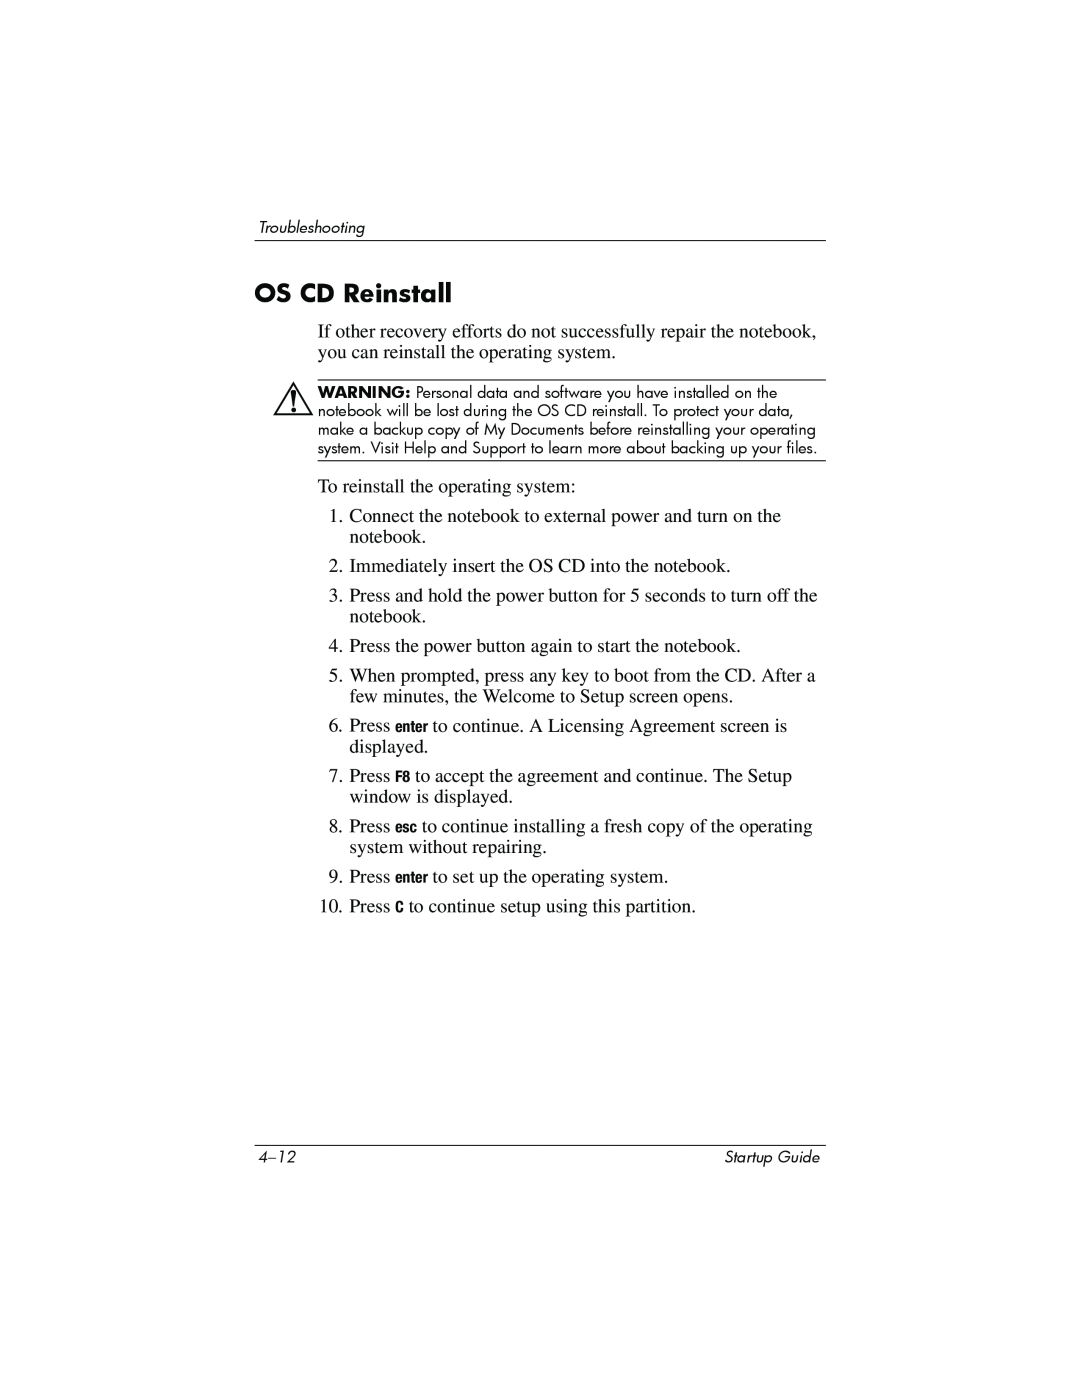 Compaq Personal Computer manual OS CD Reinstall 